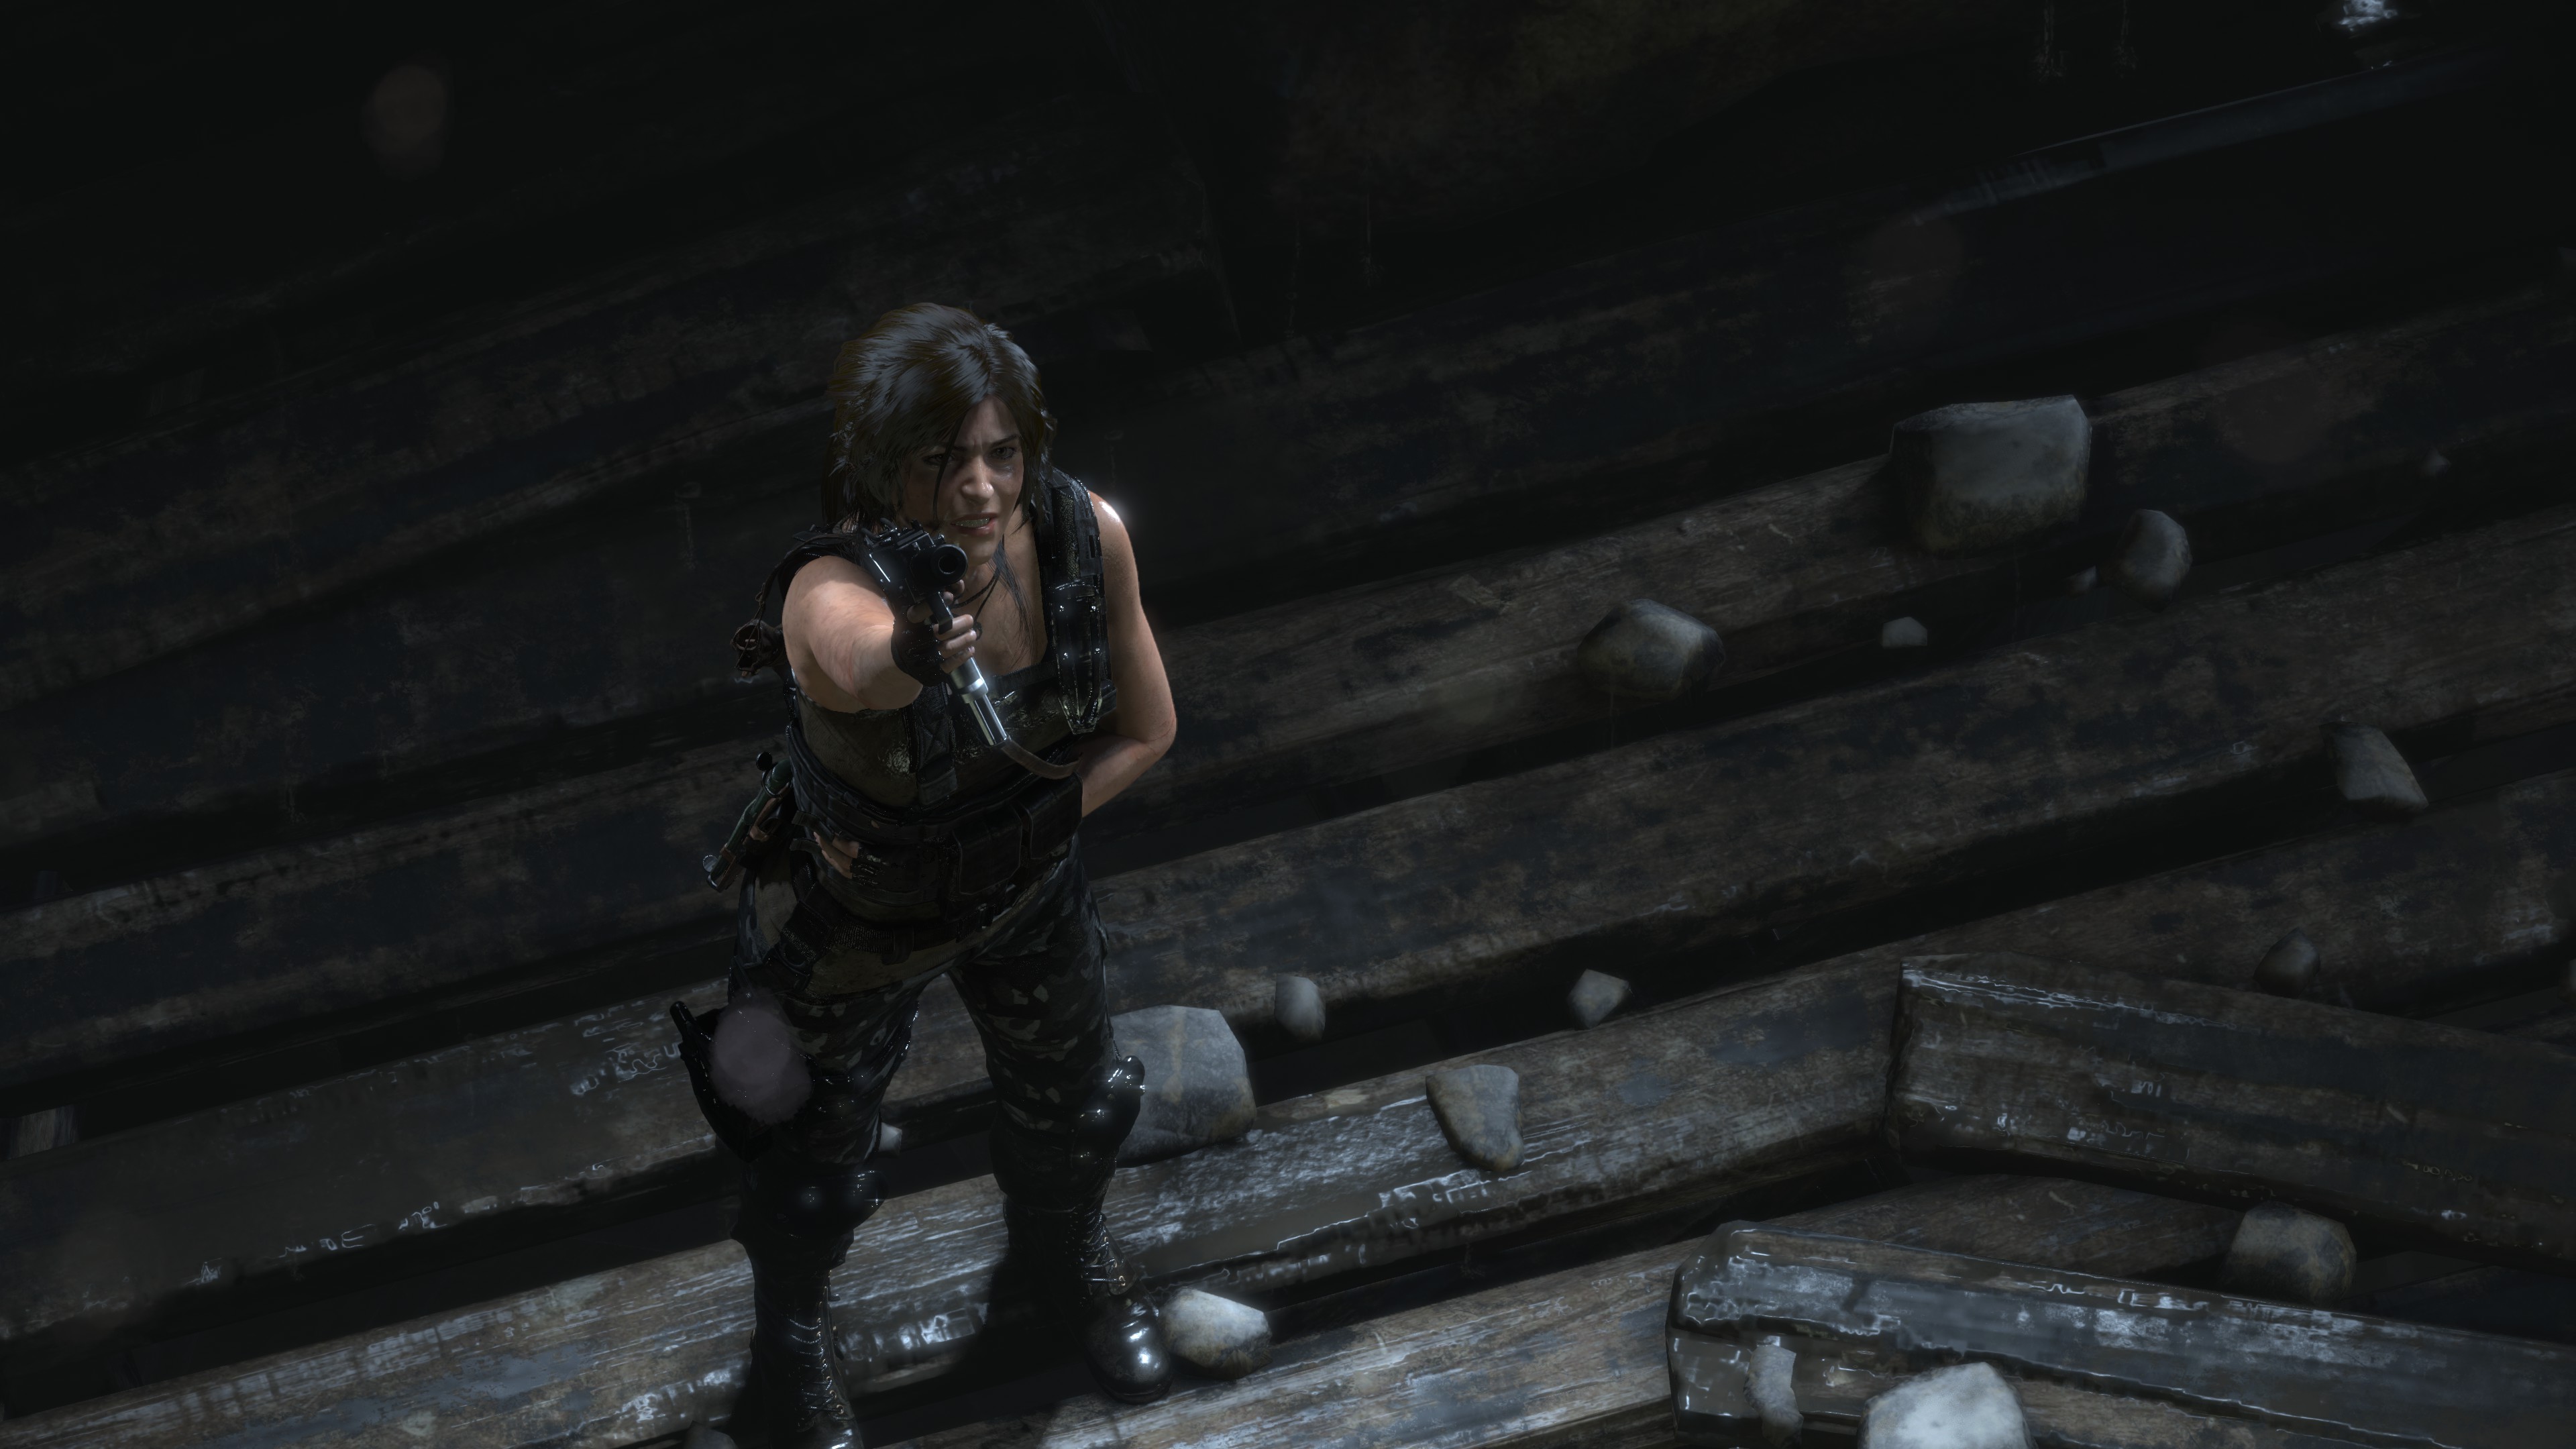 Tomb Raider 2013 Lara Croft Video Game Girls Video Game Art Screen Shot 3840x2160